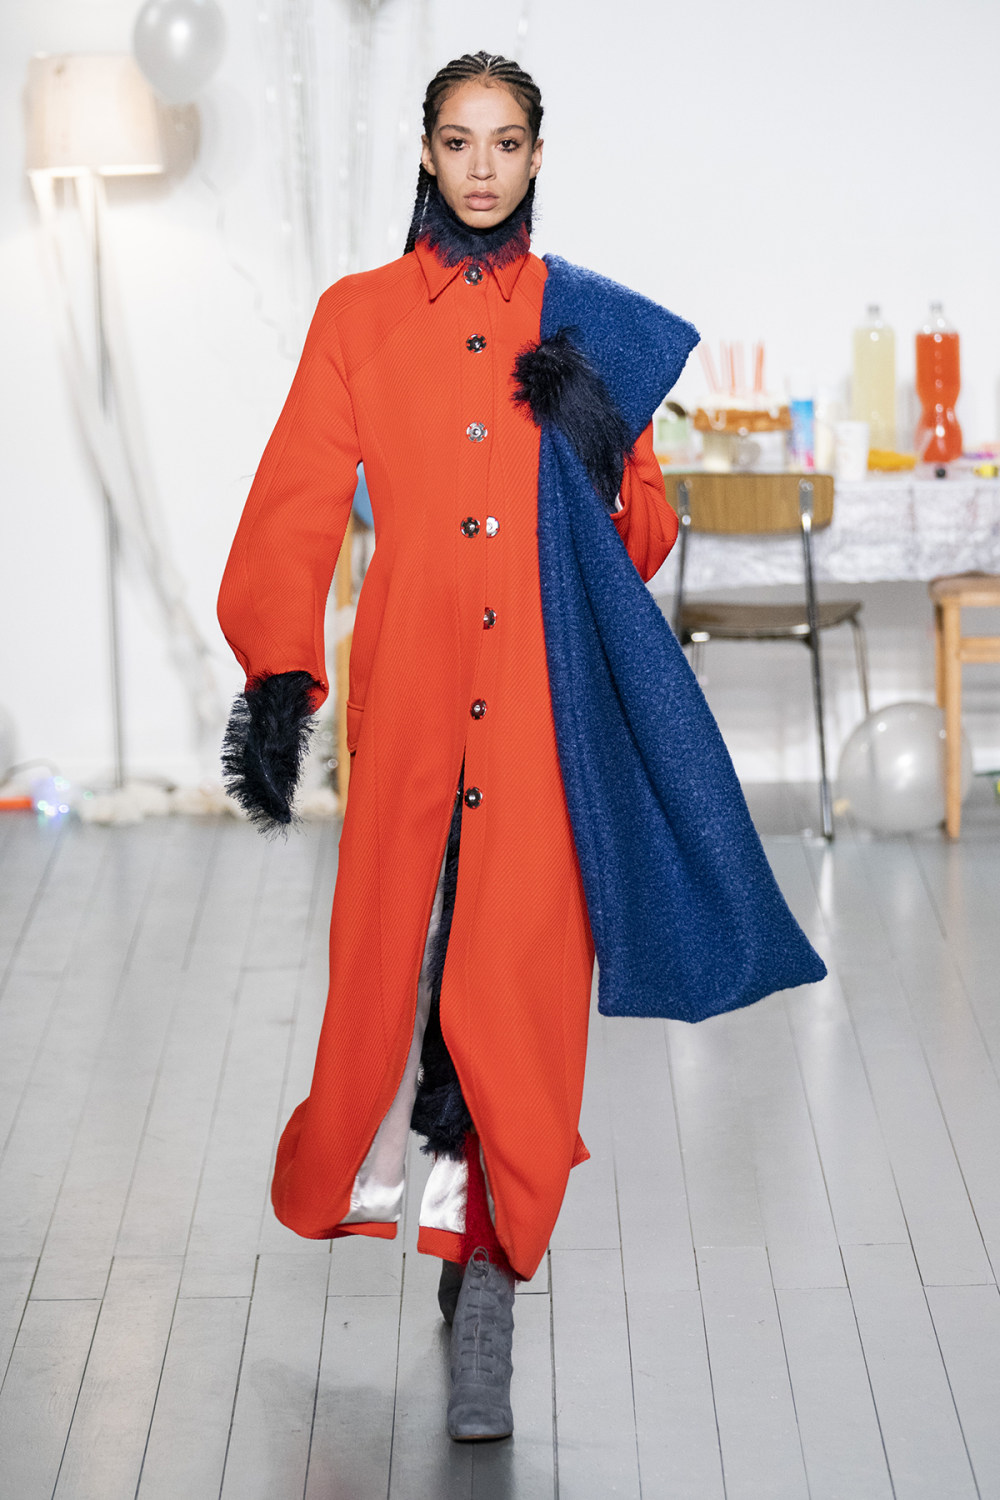 Richard Malone时装系列带有流苏的旋转图案和蓝色丝绸长裤和上衣-25.jpg